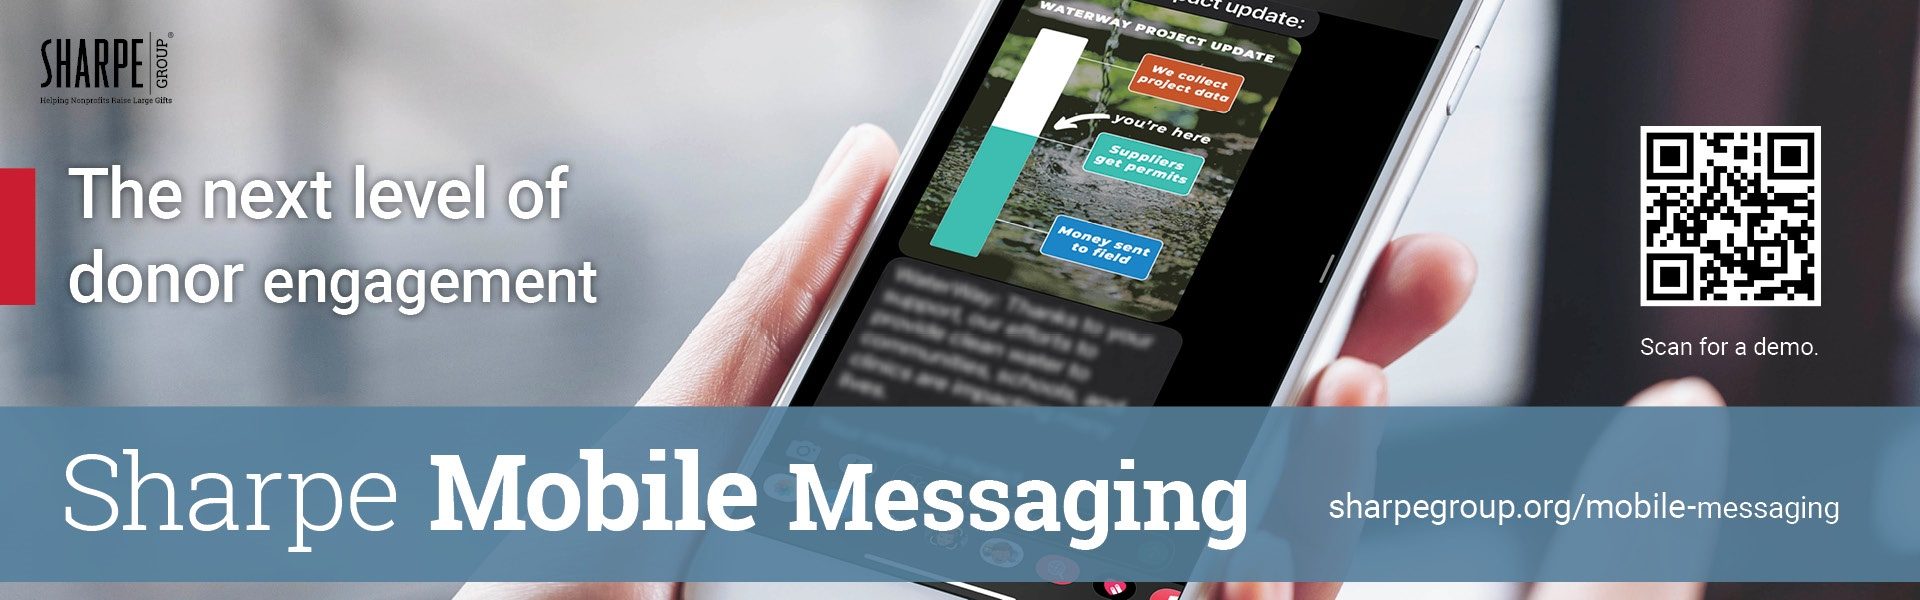 Sharpe Mobile Messaging